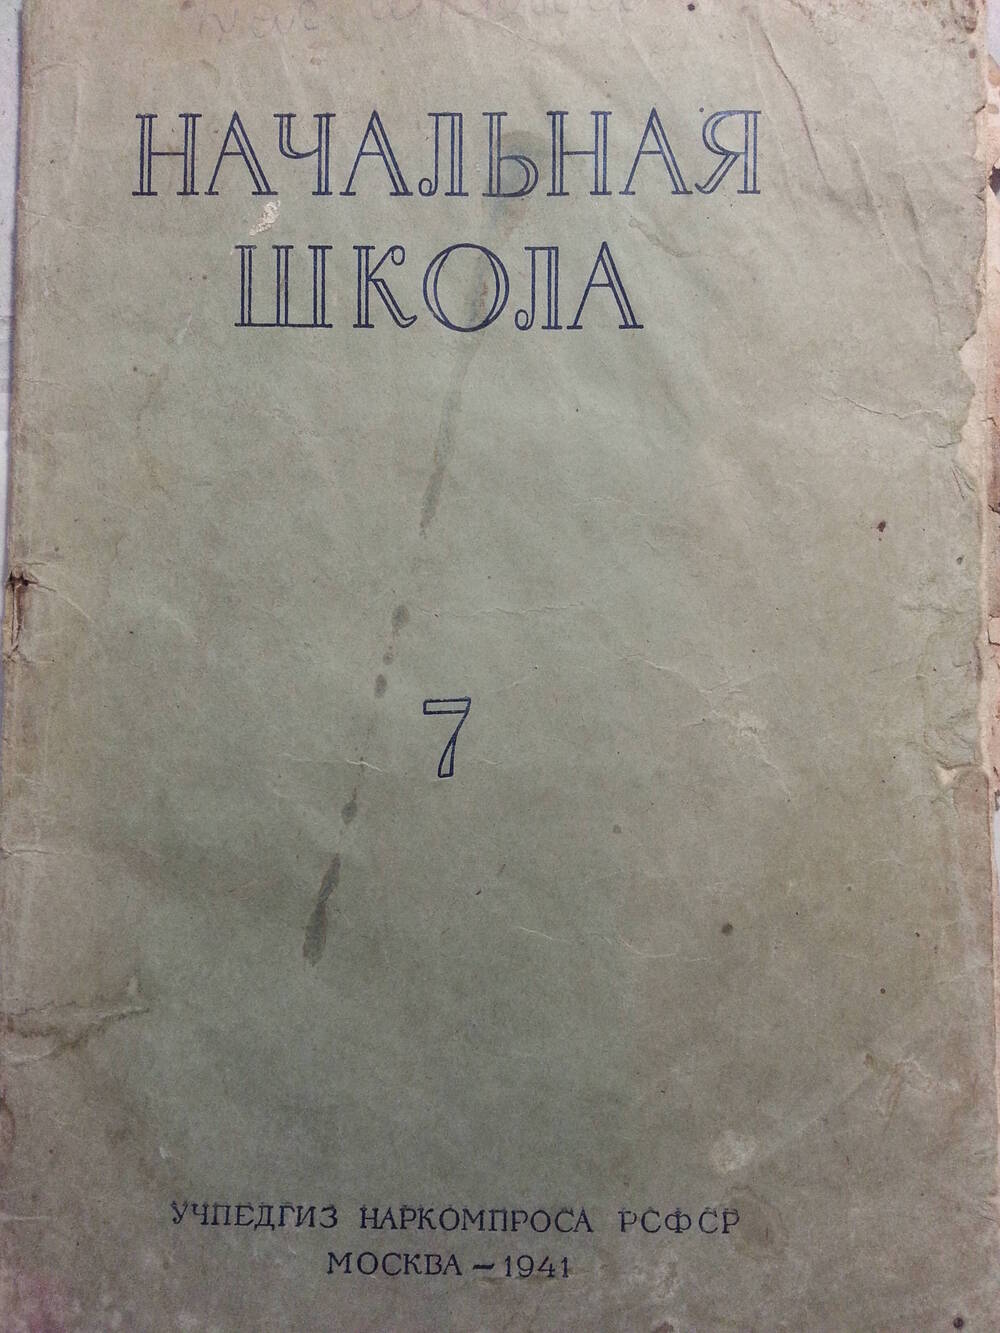 Журнал Начальная школа, Наркомпрос РСФСР. 1941, №7, с.2 .